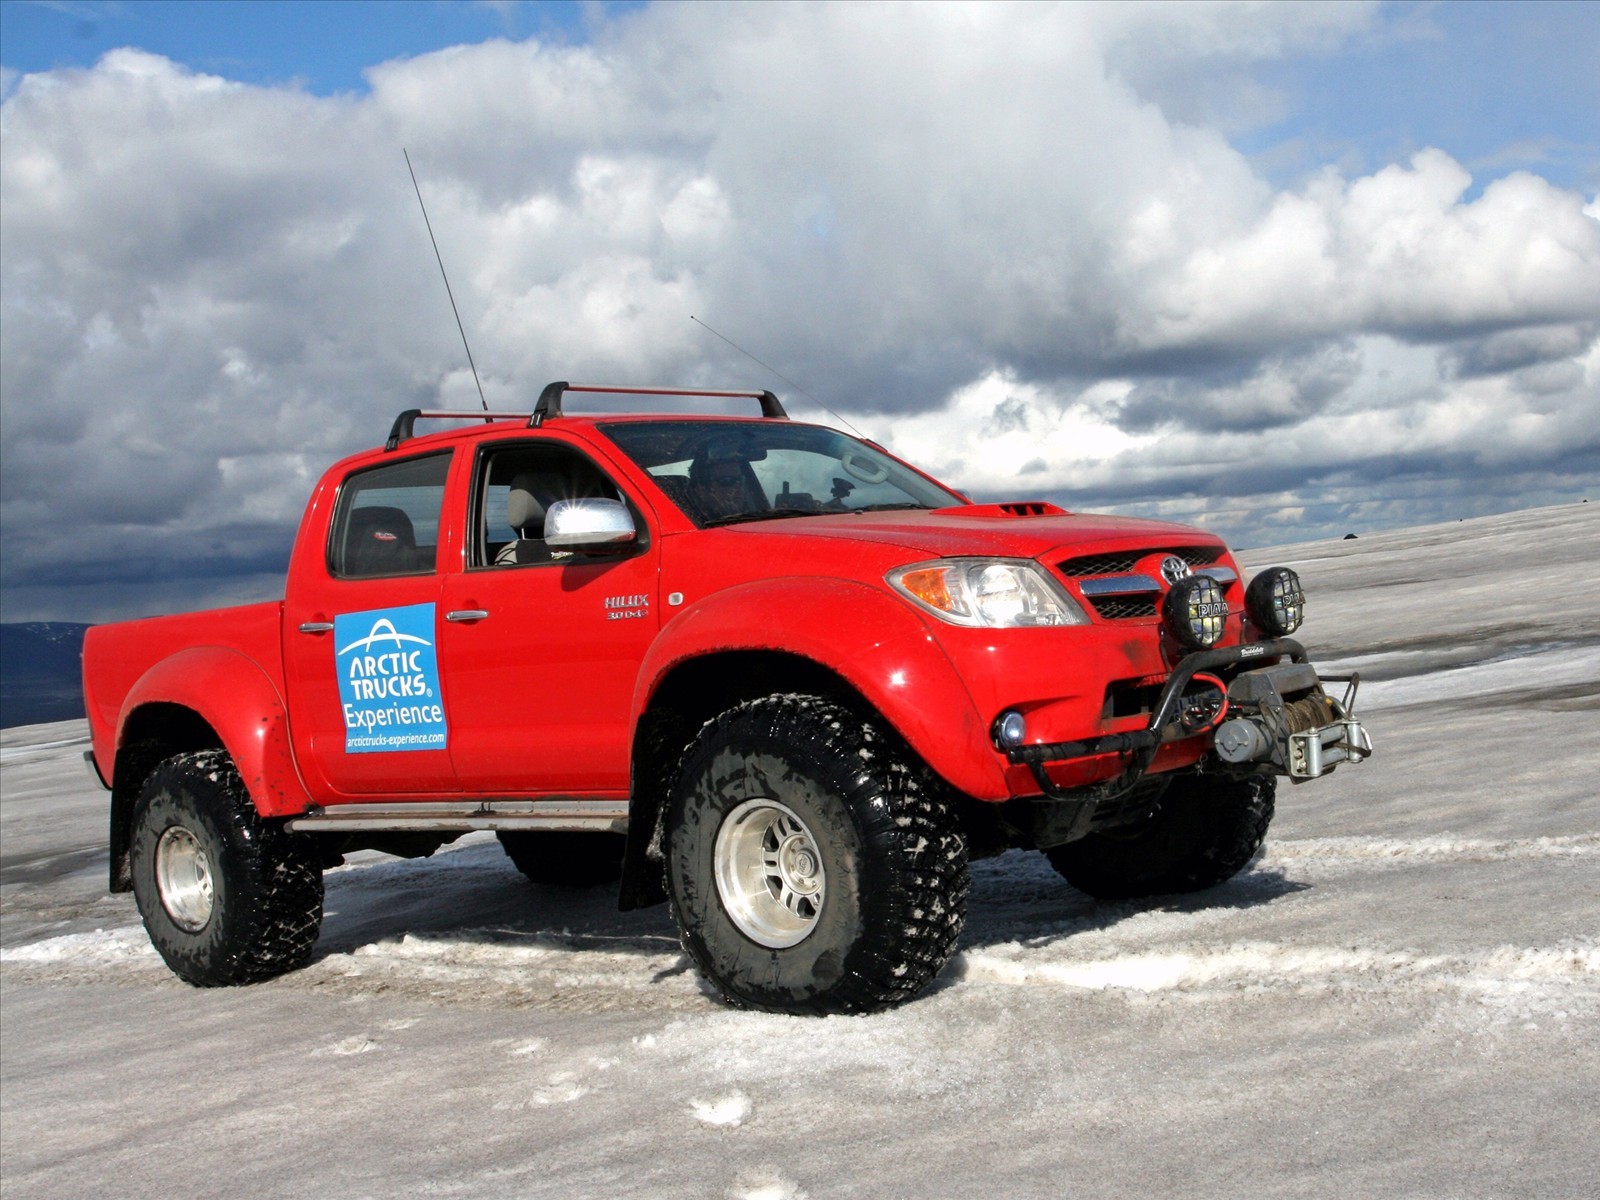 Toyota arctic truck